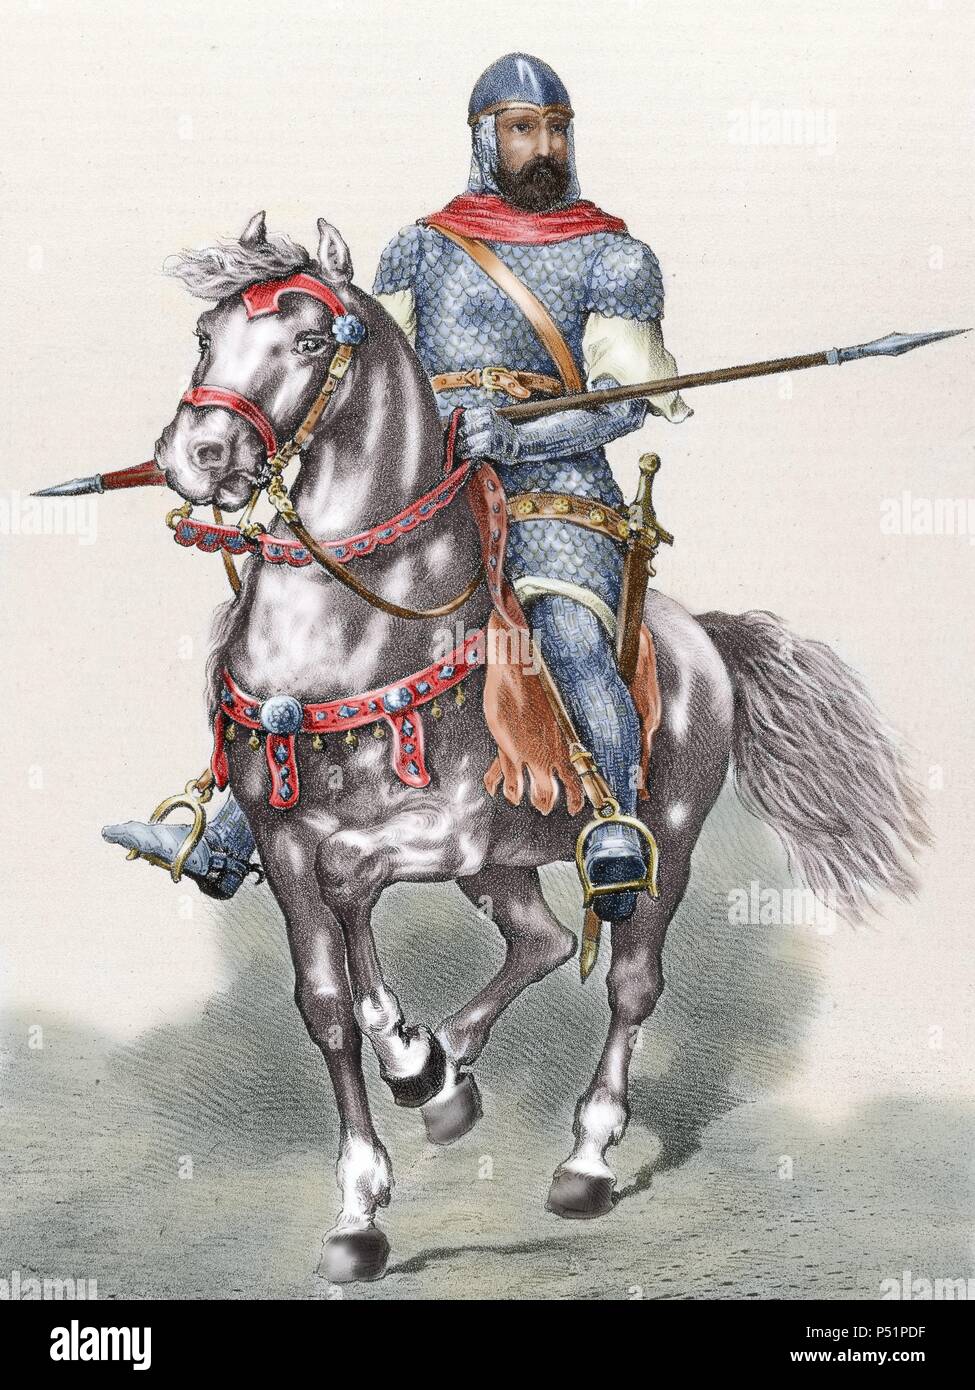 Rodrigo Diaz de Vivar (c.1043-1099), conosciuta come El Cid. Nobile castigliano, capo militare e diplomatico. El Cid Babieca equitazione. Incisione colorata. Foto Stock